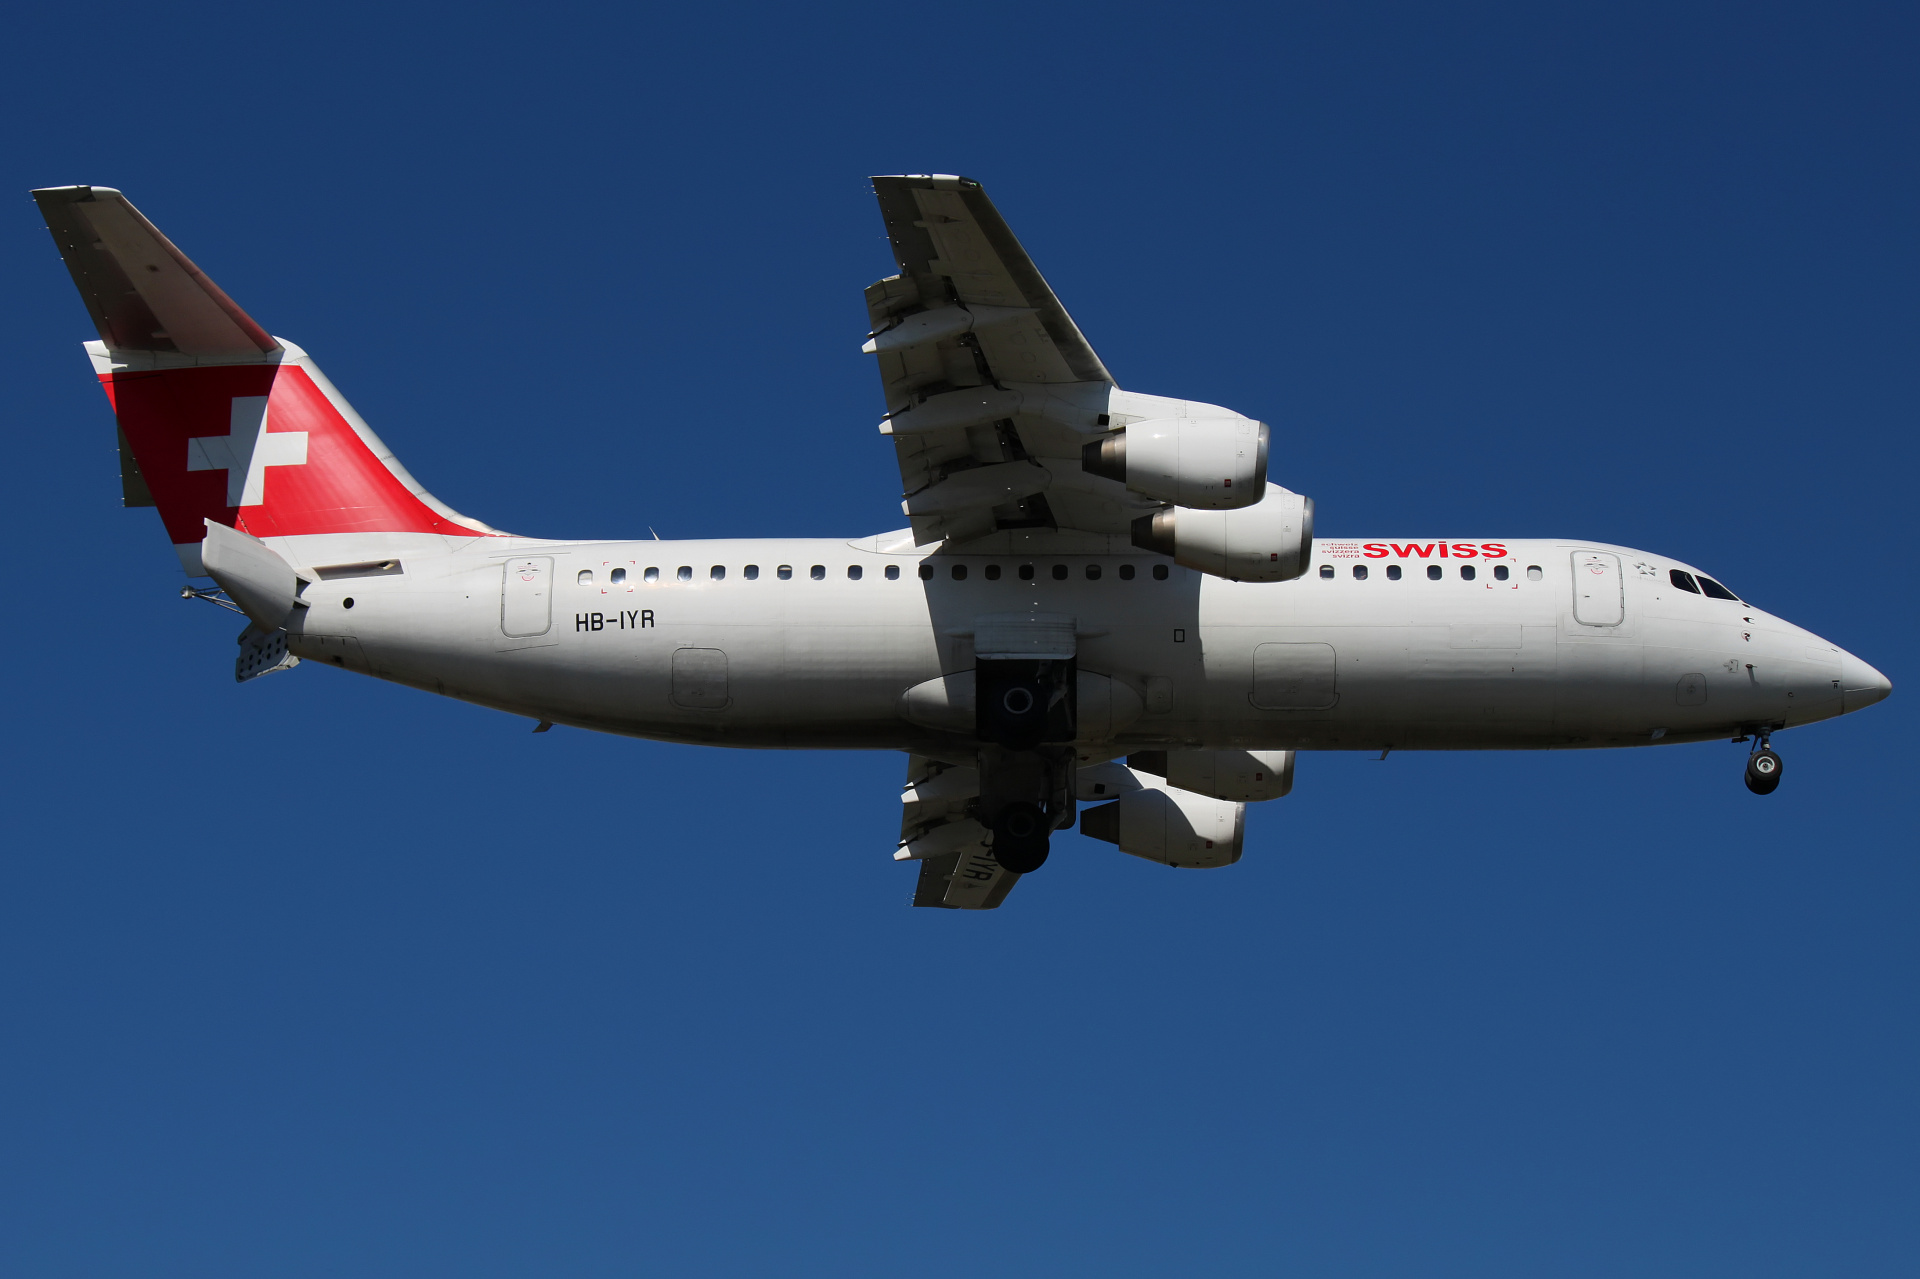 HB-IYR (Aircraft » EPWA Spotting » BAe 146 and revisions » Avro RJ100 » Swiss Global Air Lines)